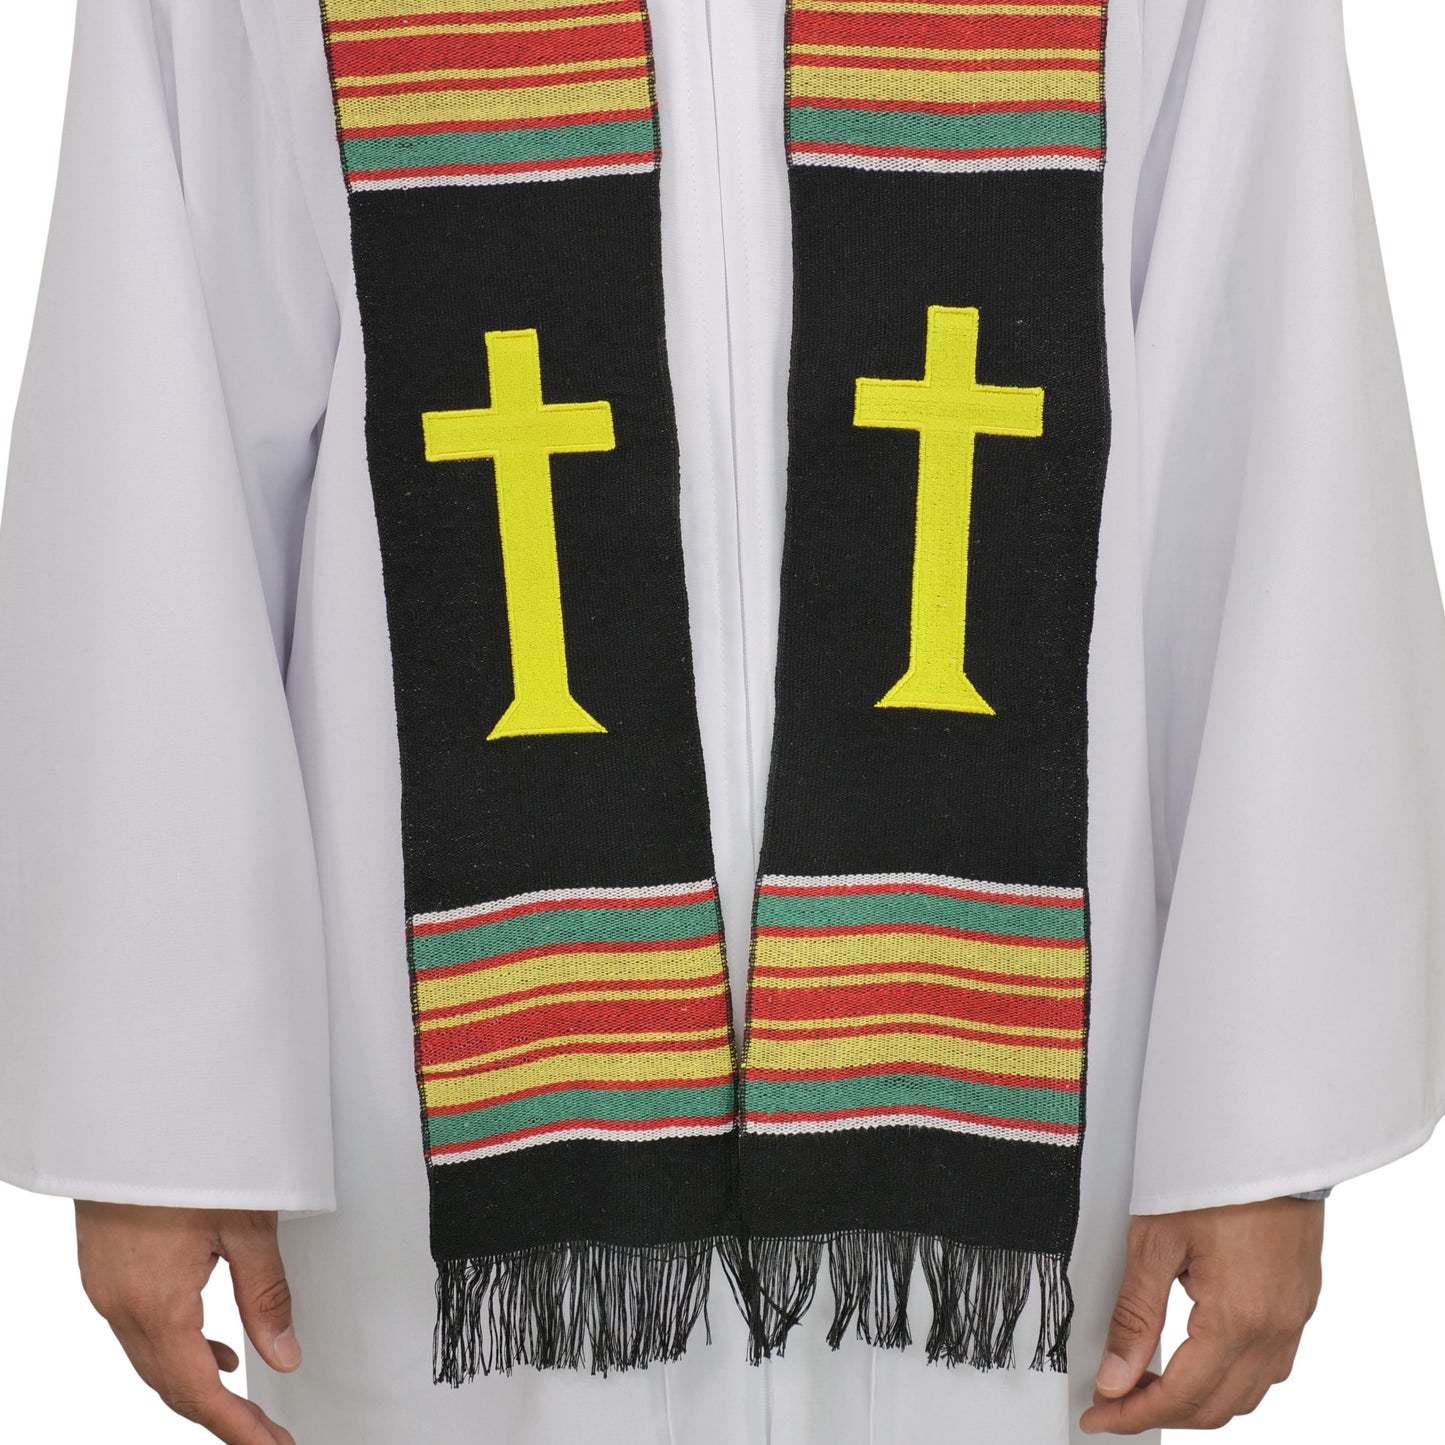 Christian Cross (Ushers and Clergy) Kente Graduation Sash/Stole